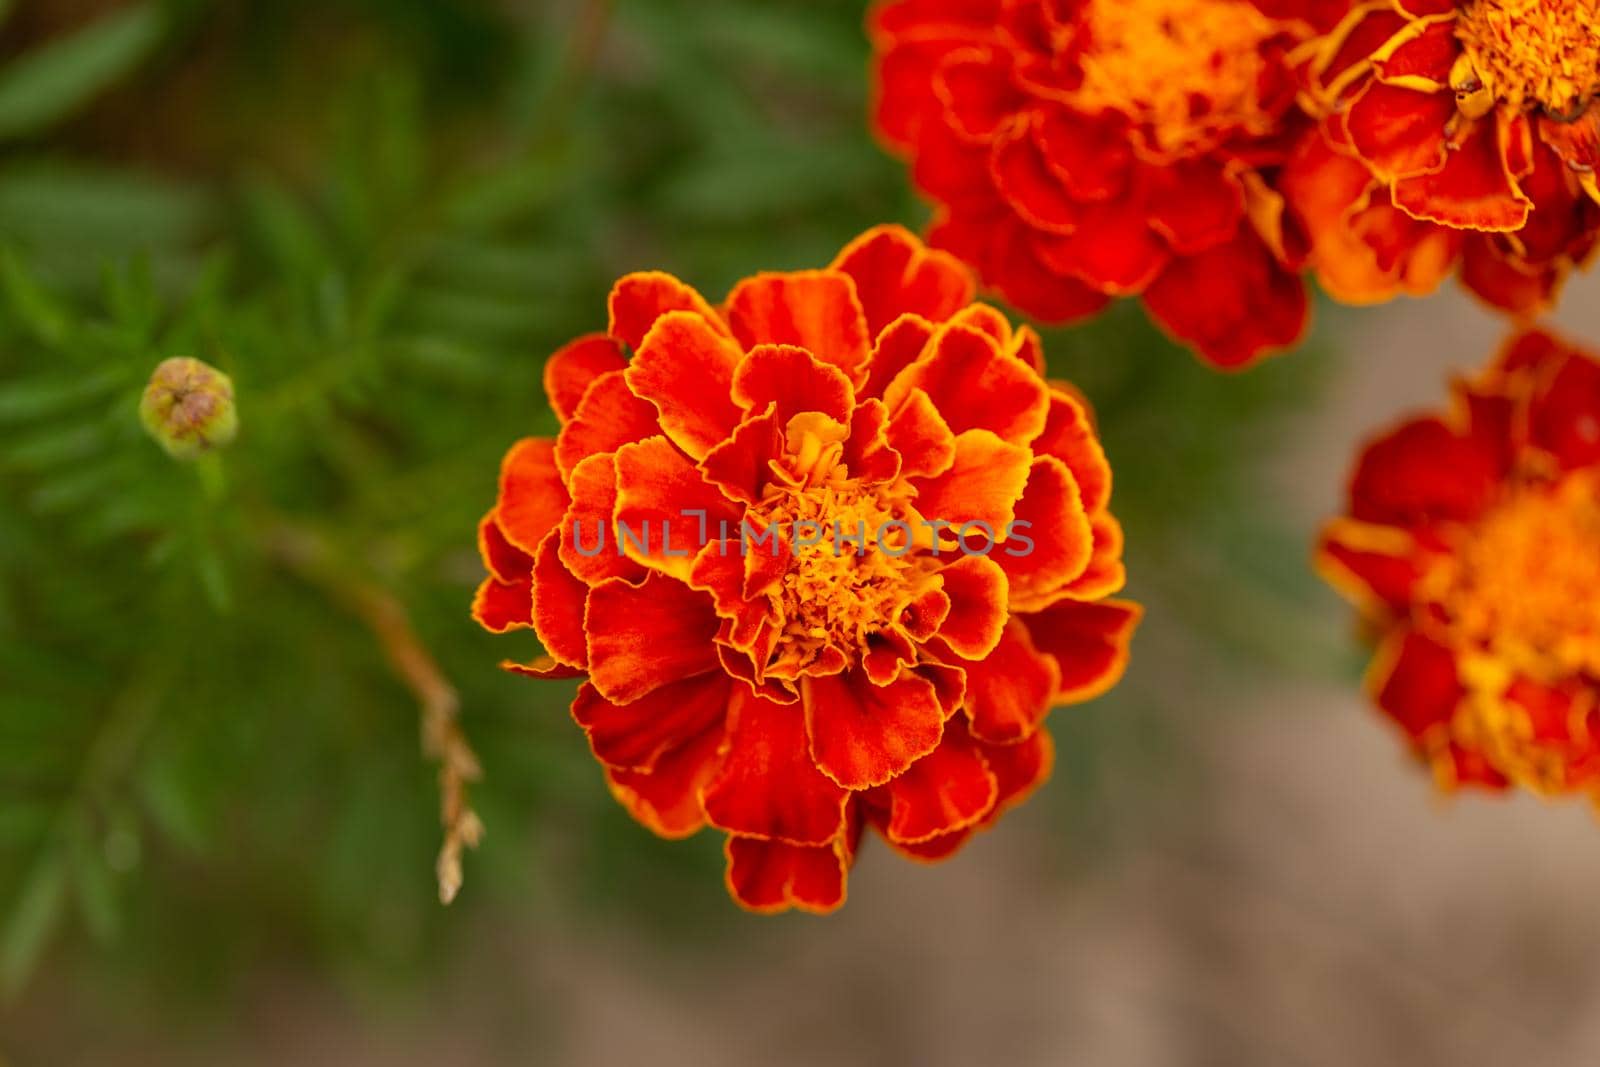 Orange marigold flowers in garden, green background, closeup macro view